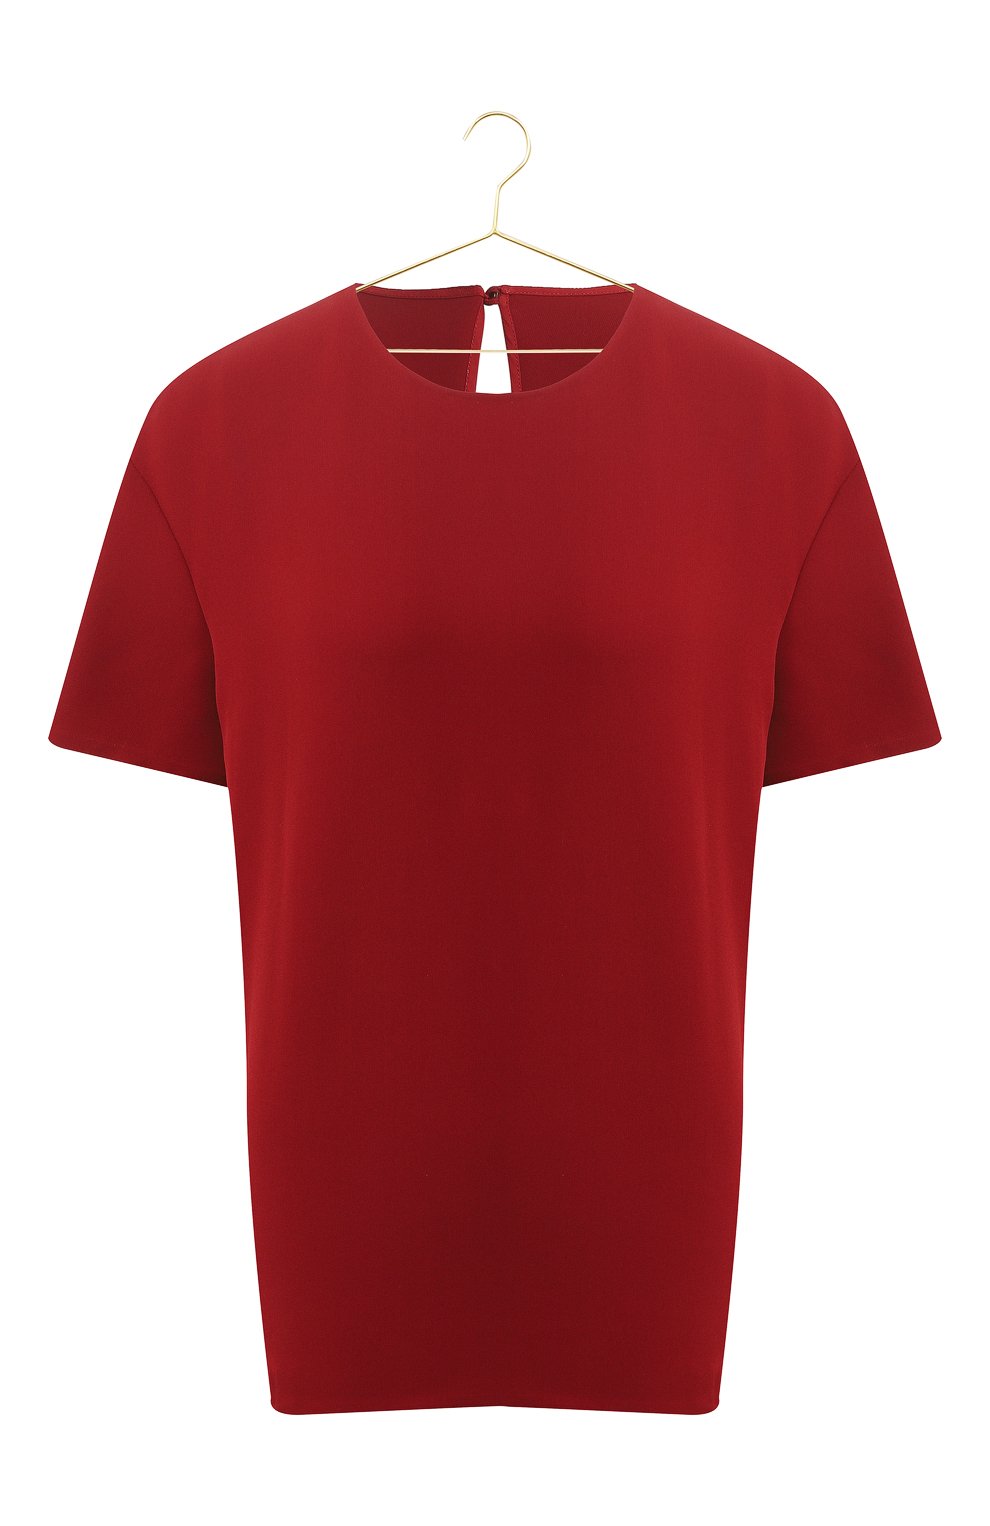 Шелковая блузка | Valentino | Бордовый - 1